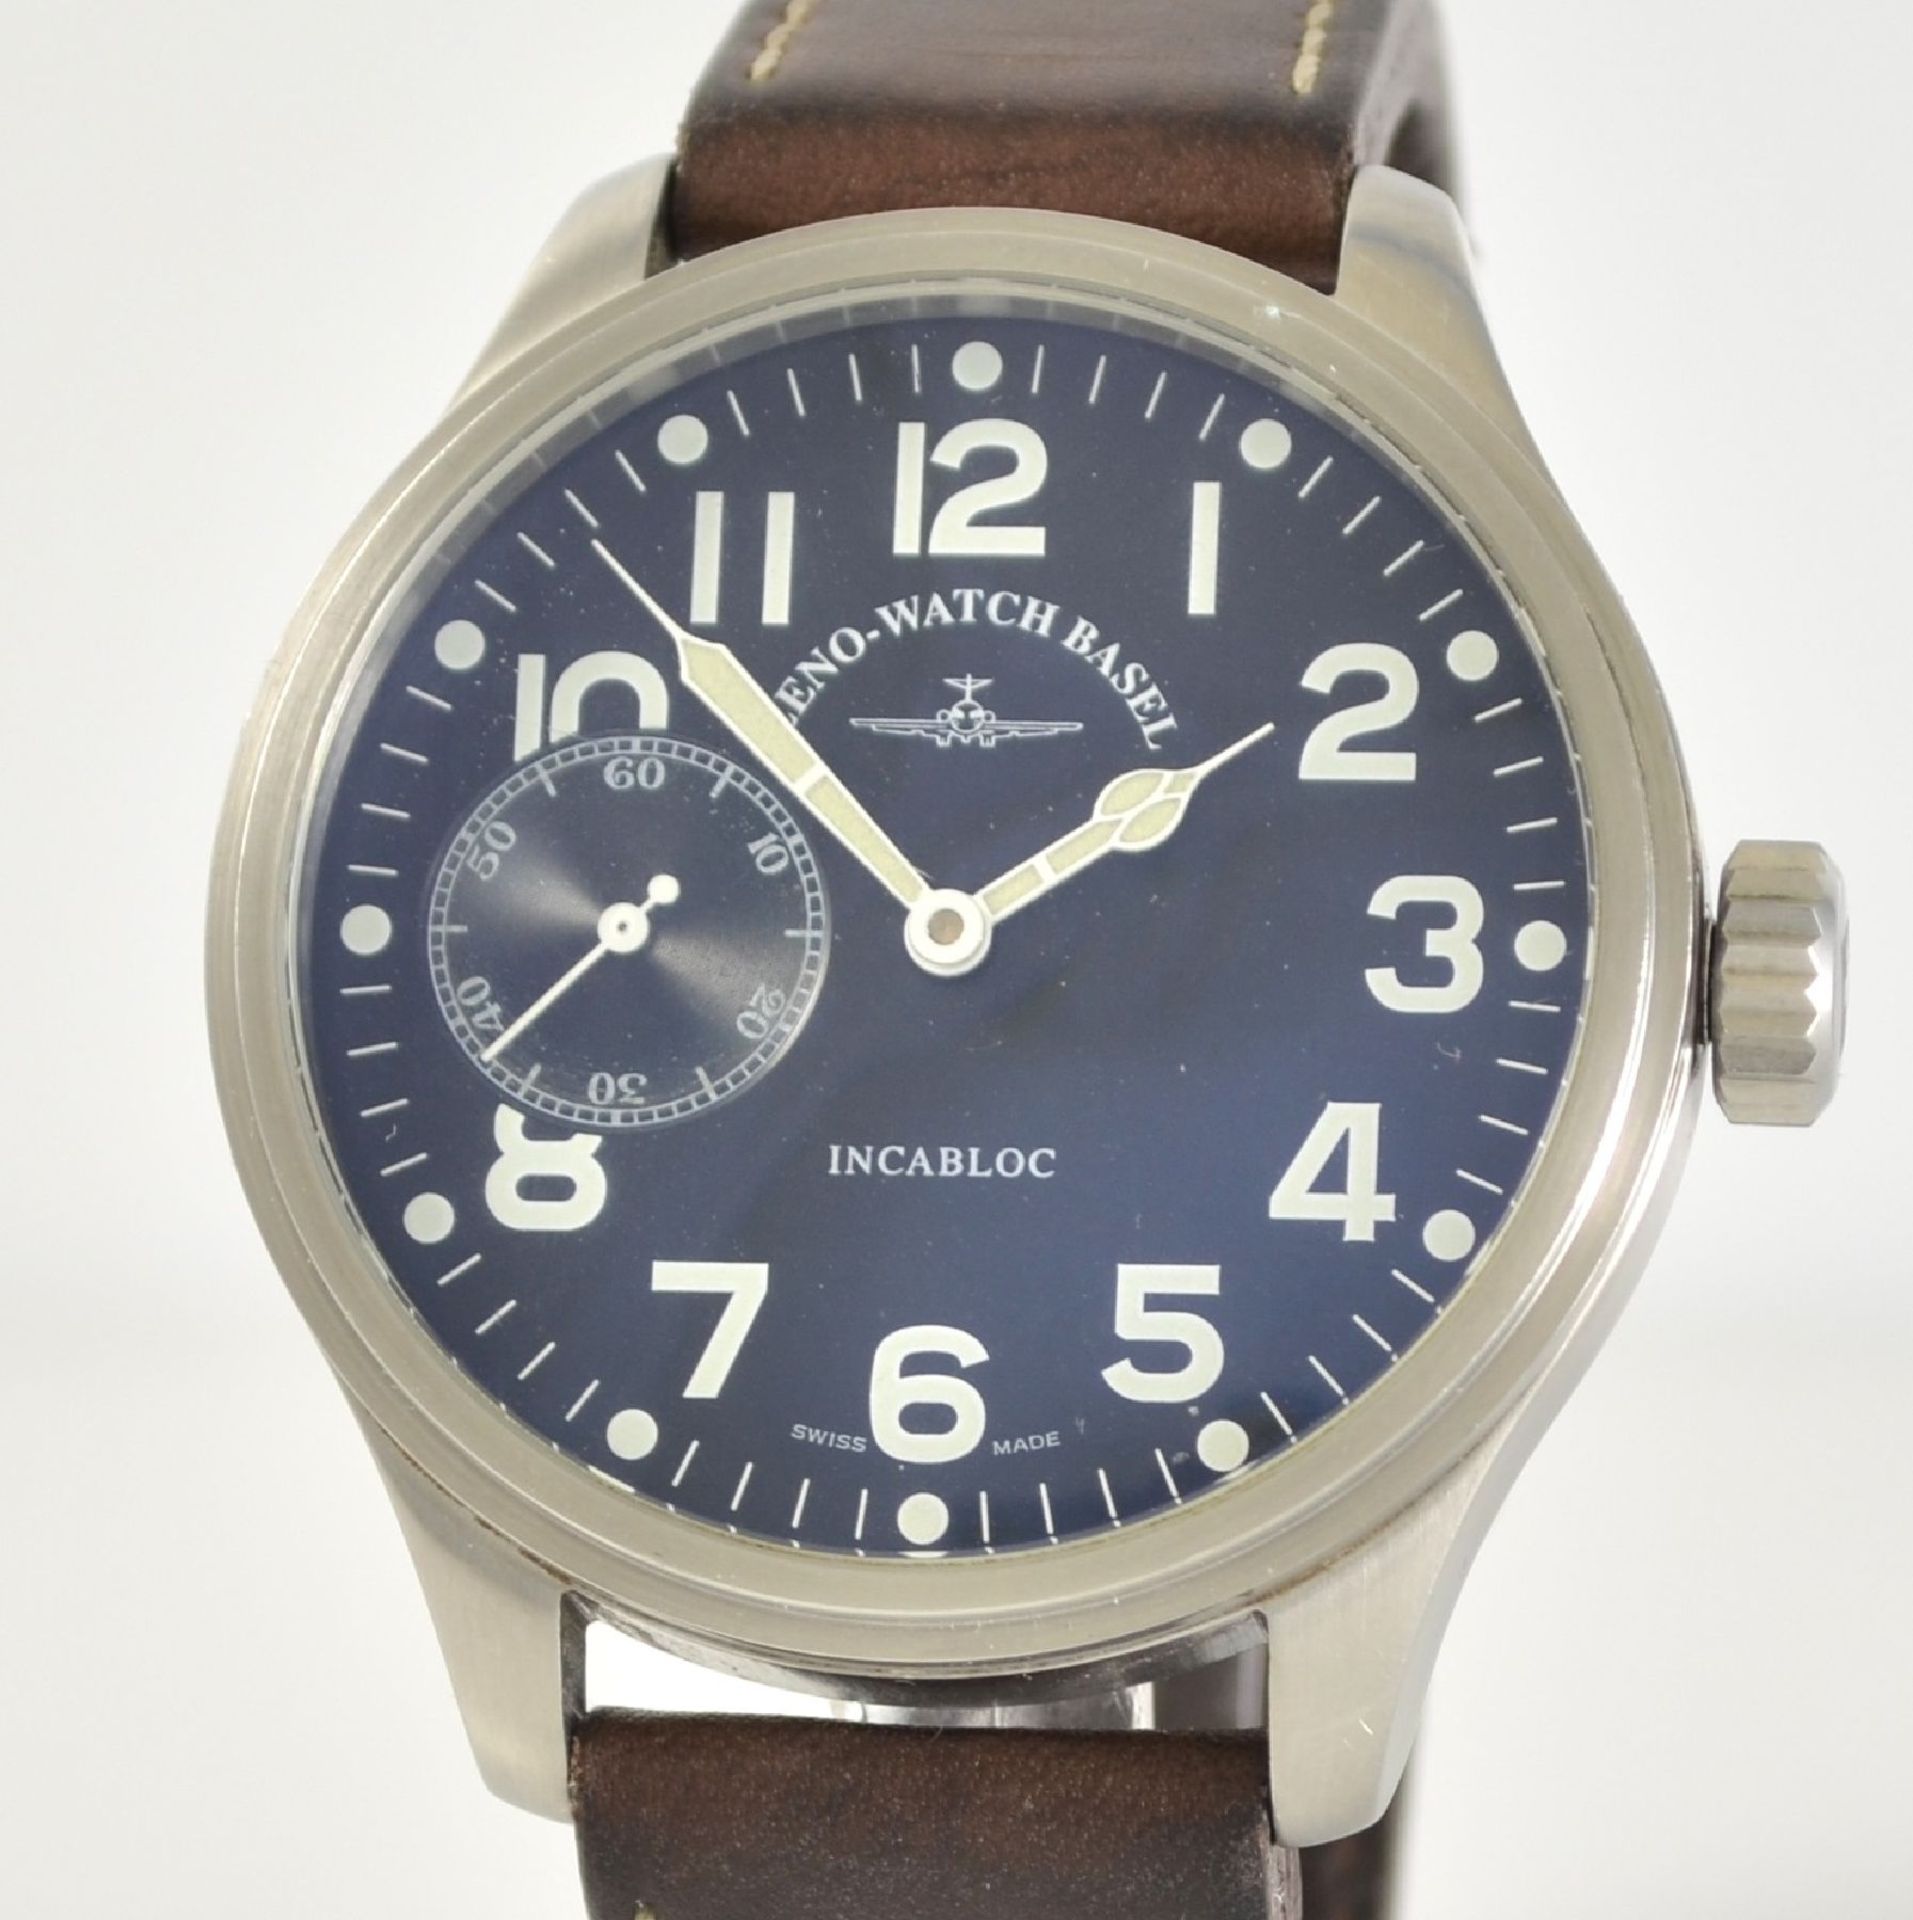 ZENO-WATCH BASEL Pilot big gents wristwatch, Switzerland sold in May 2006 according to warranty - Bild 4 aus 7